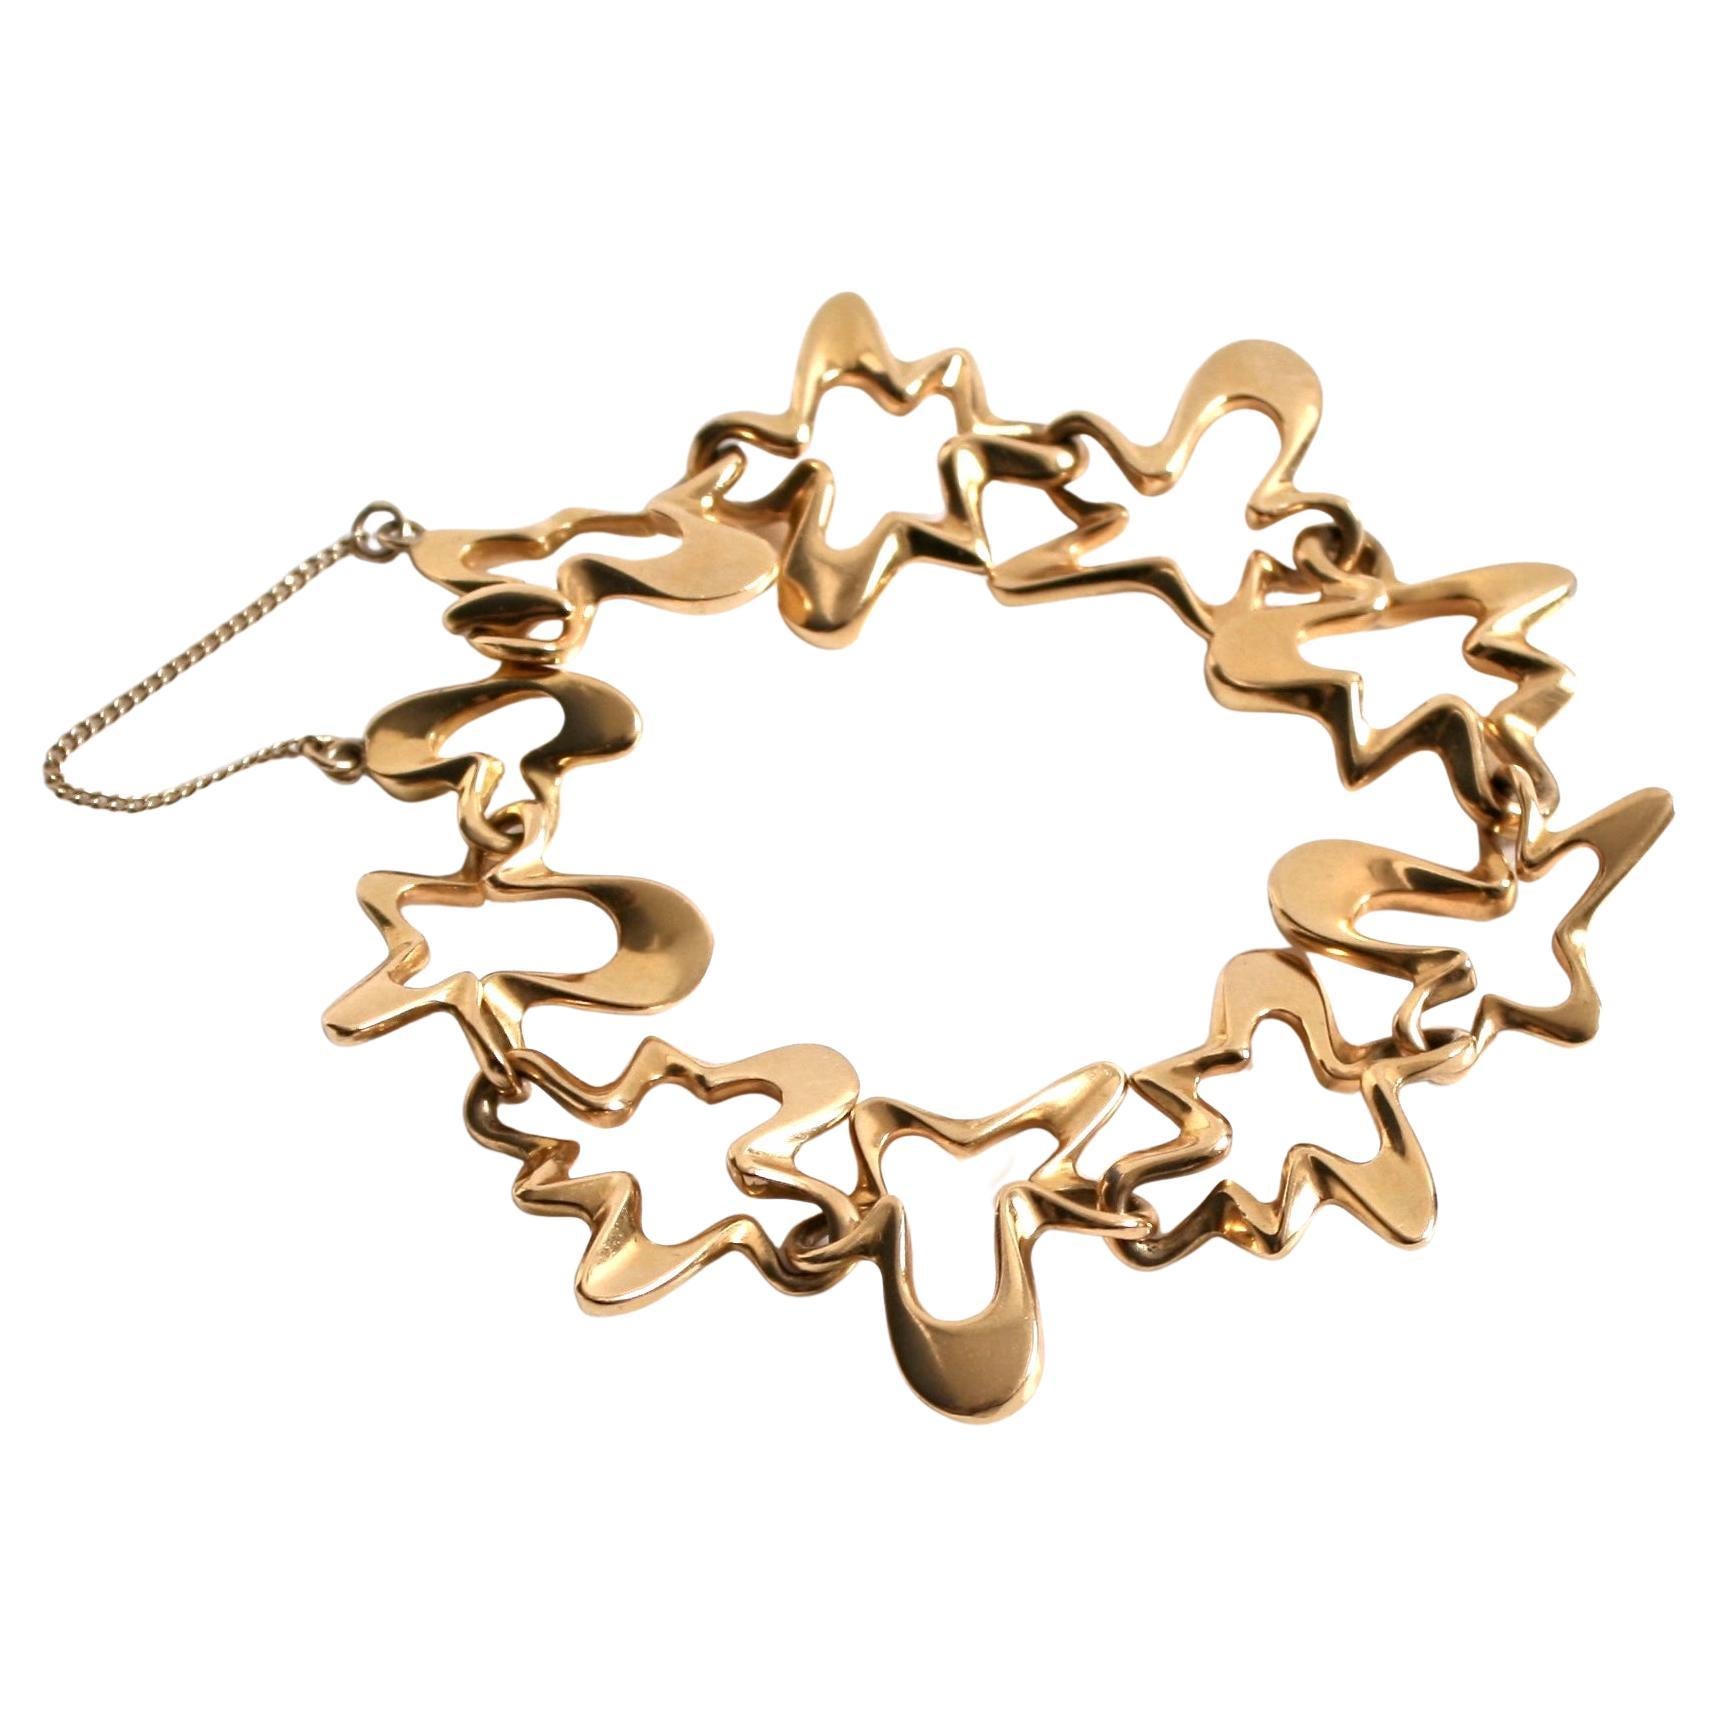 Georg Jensen 18 Karat Gold "Splash" Bracelet Designed by Henning Koppel For Sale